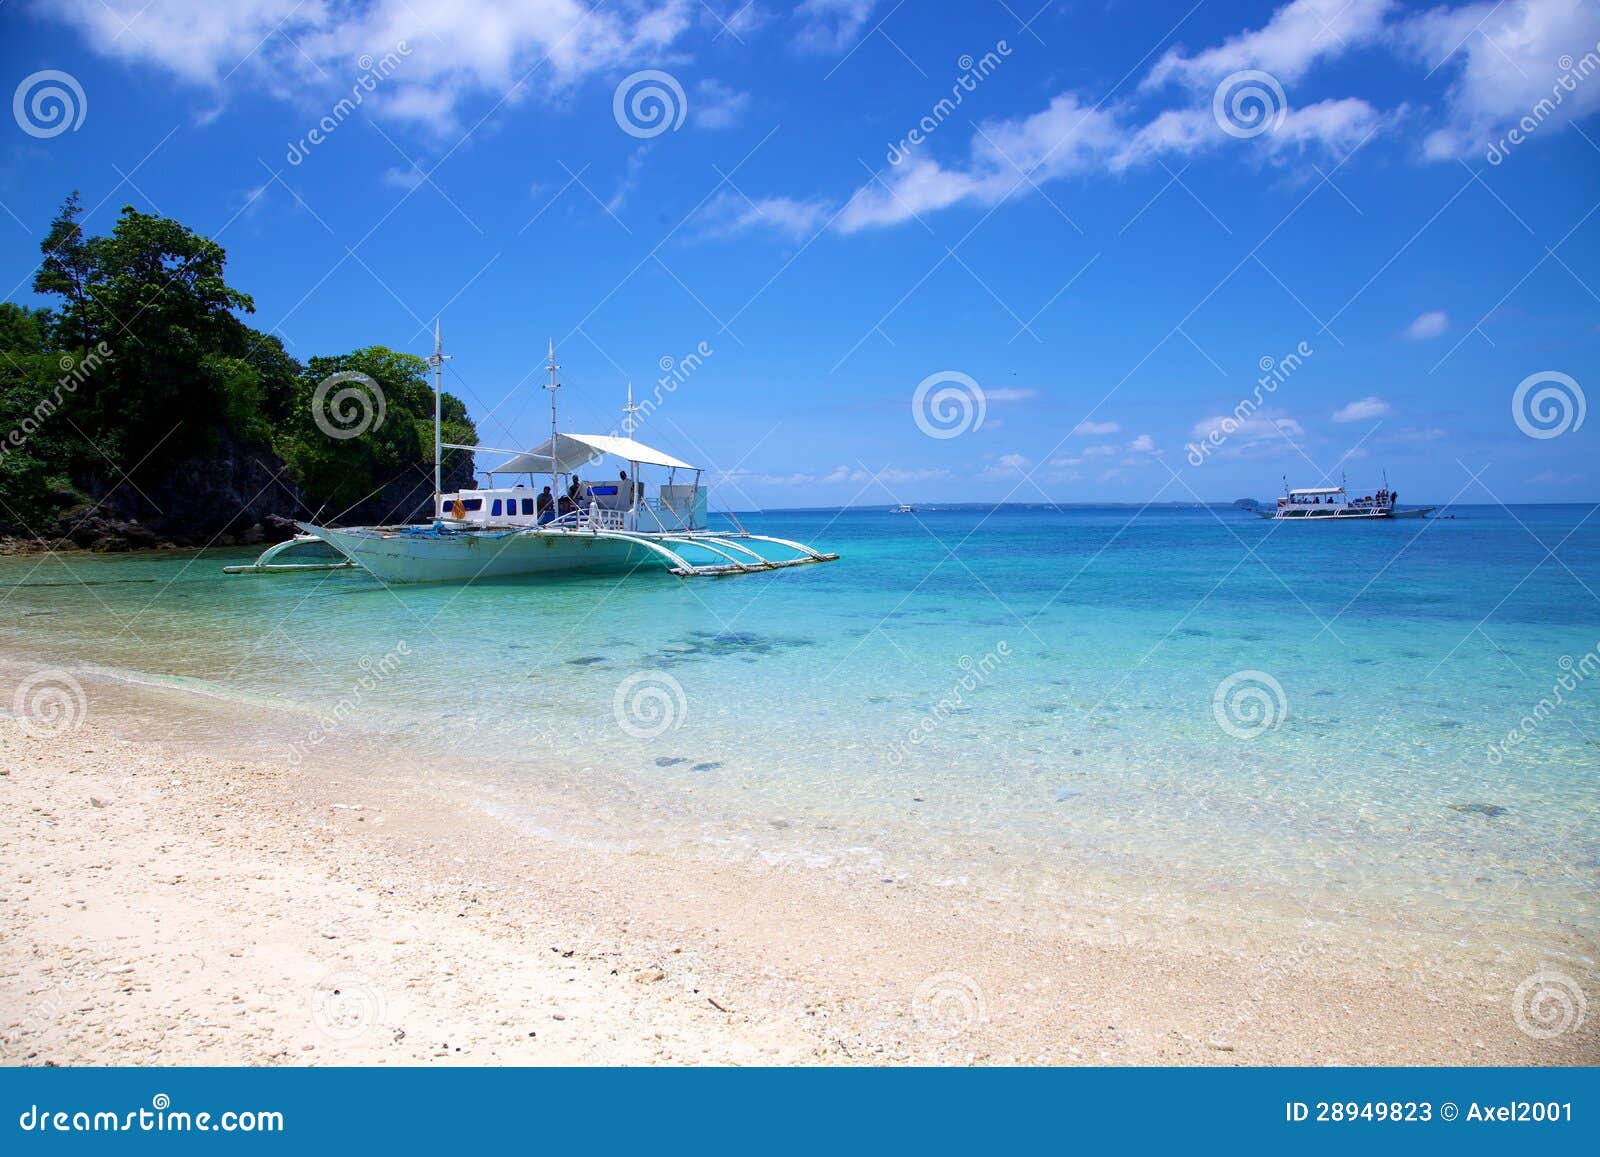 banca boat on white sand tropical beach on malapascua island, philippines